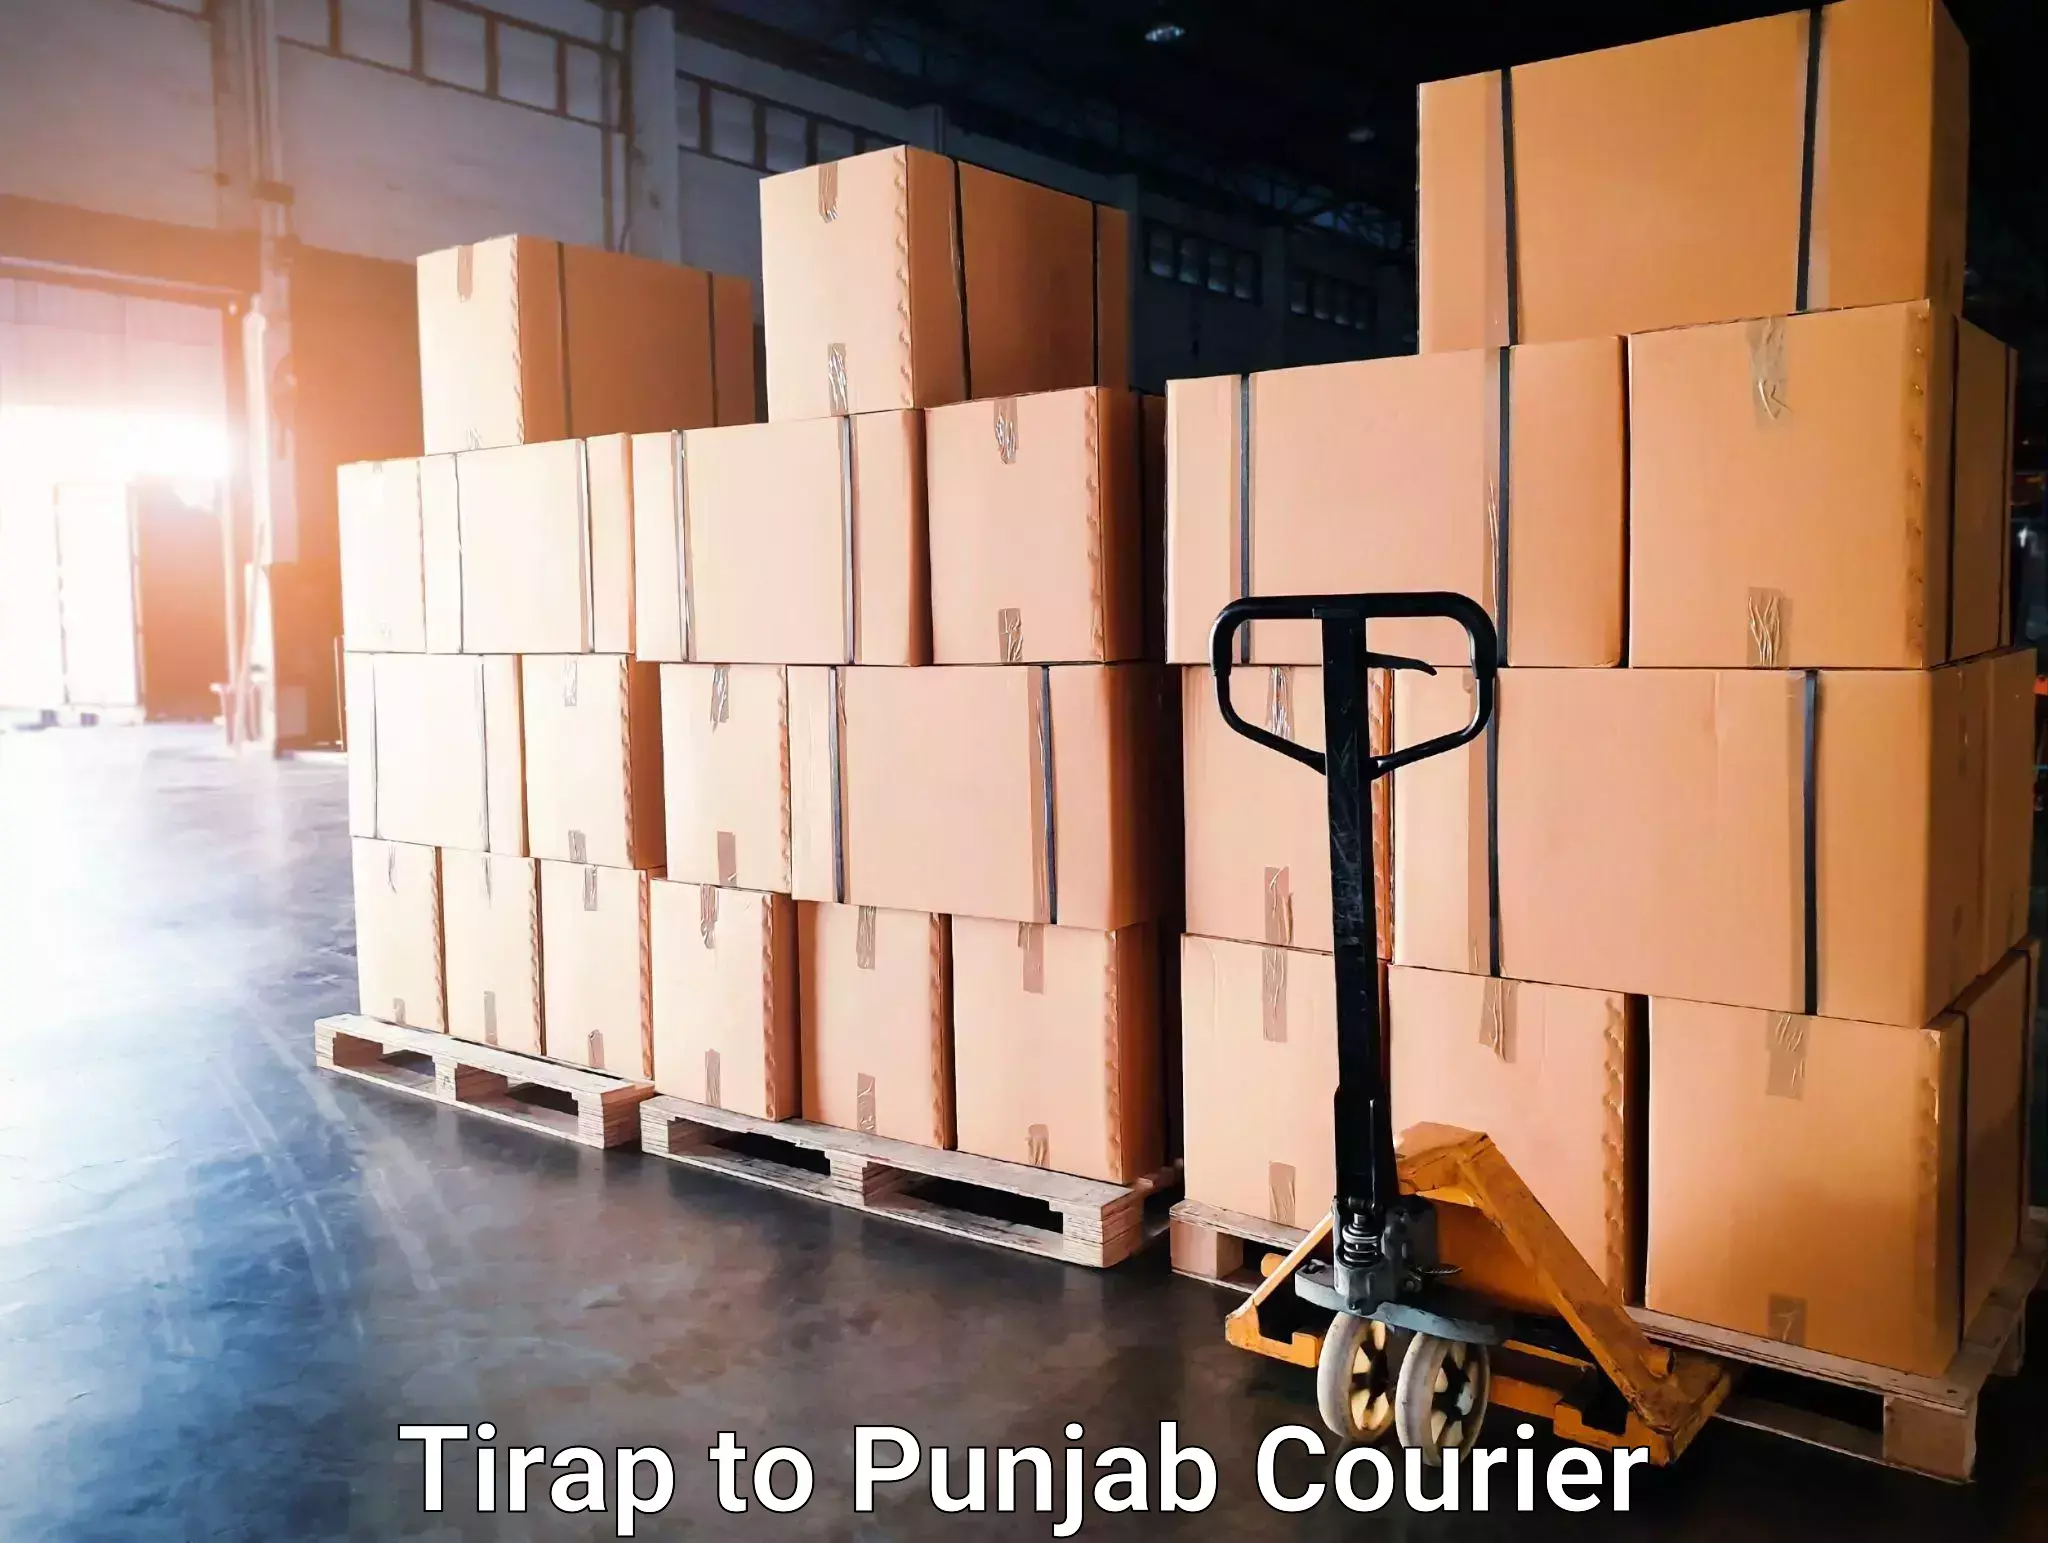 High-speed parcel service Tirap to Punjab